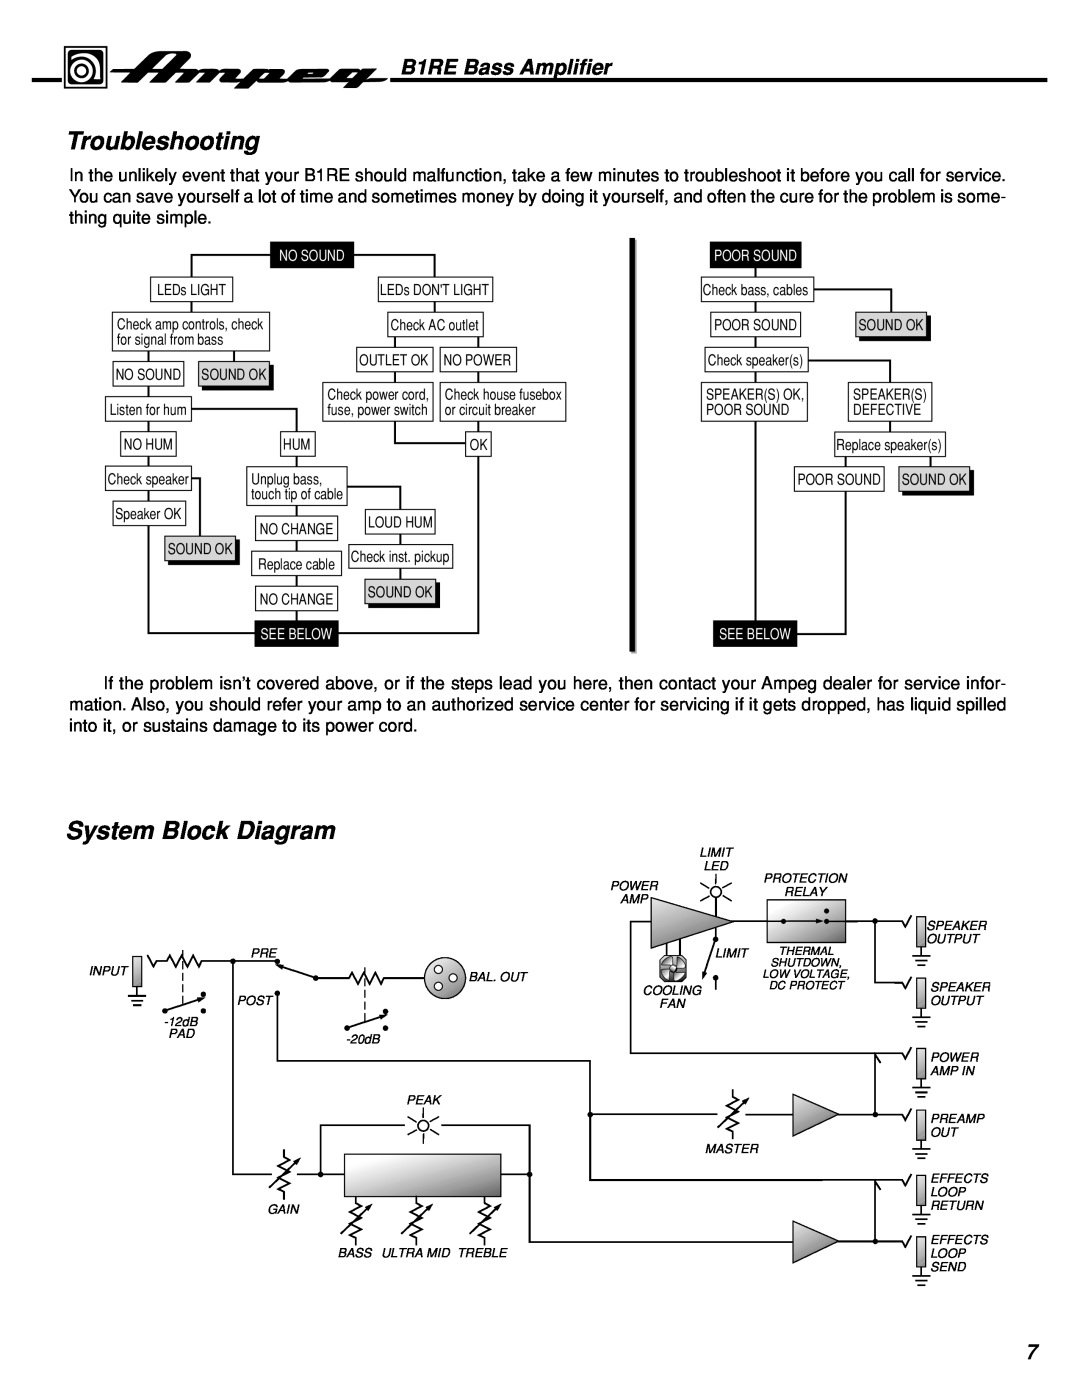 Ampeg Troubleshooting, System Block Diagram, B1RE Bass Amplifier, LEDs LIGHT, No Power, or circuit breaker, Unplug bass 